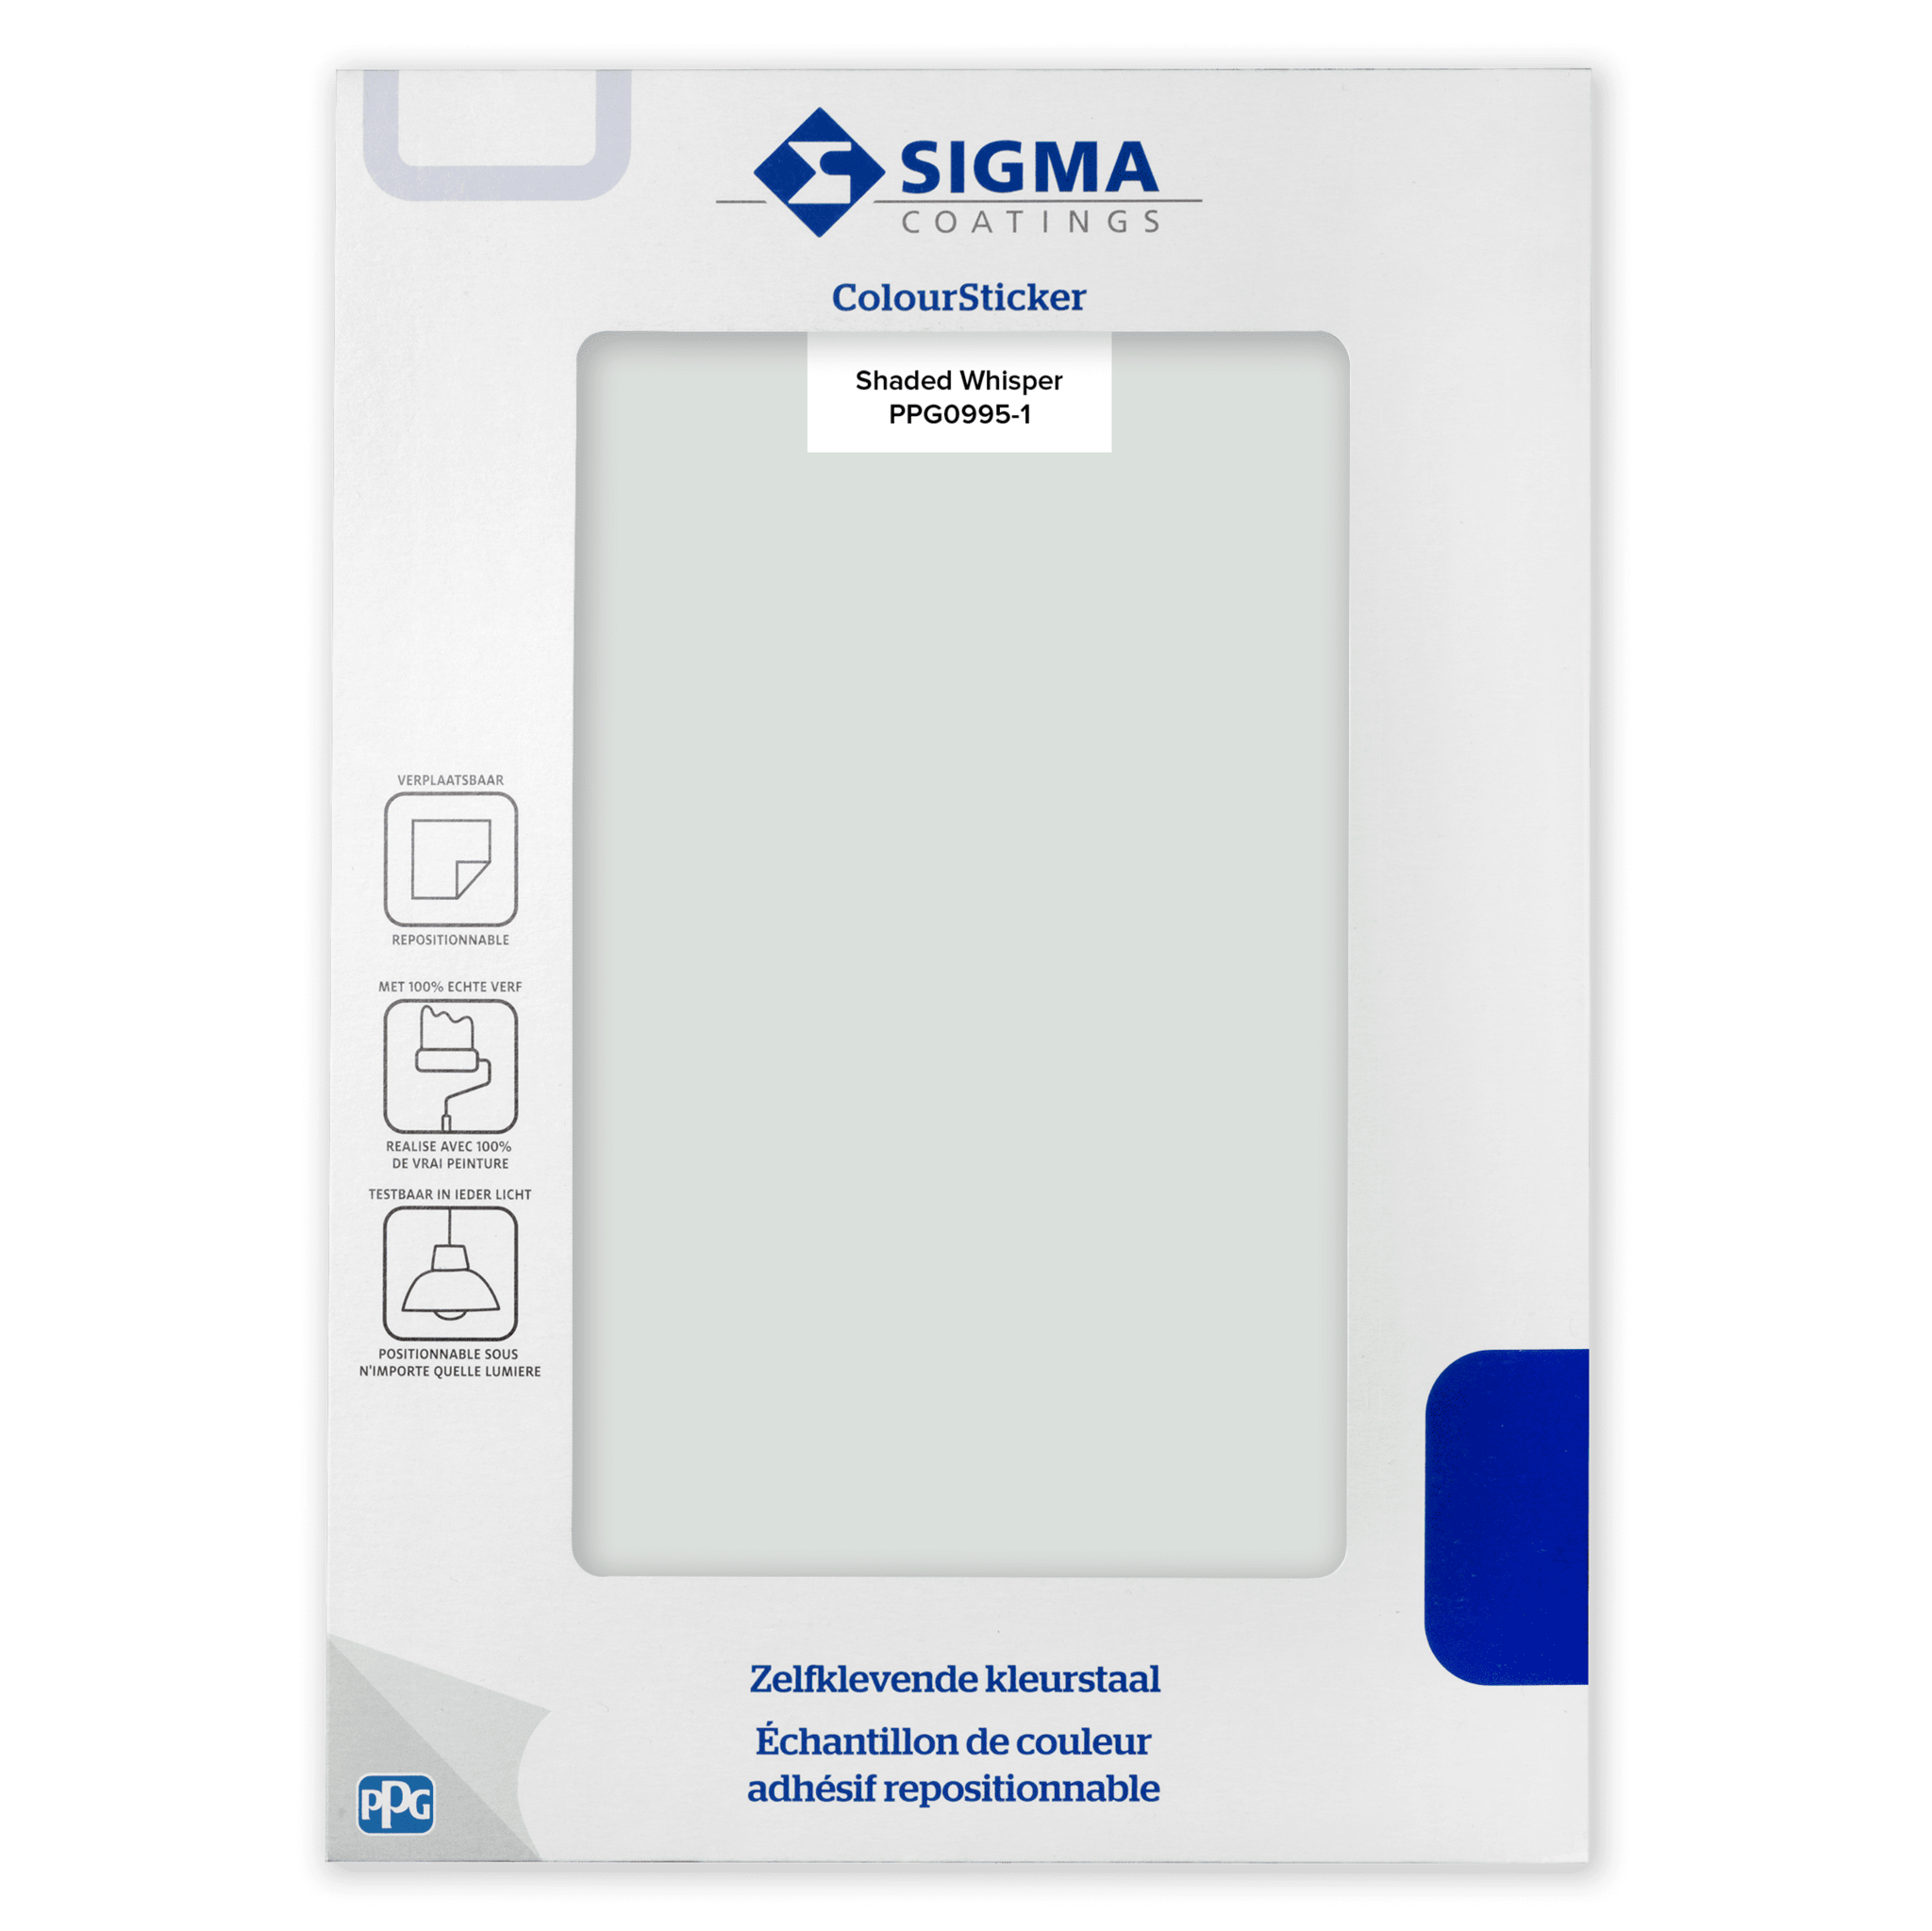 Sigma ColourSticker - Shaded Whisper 995-1